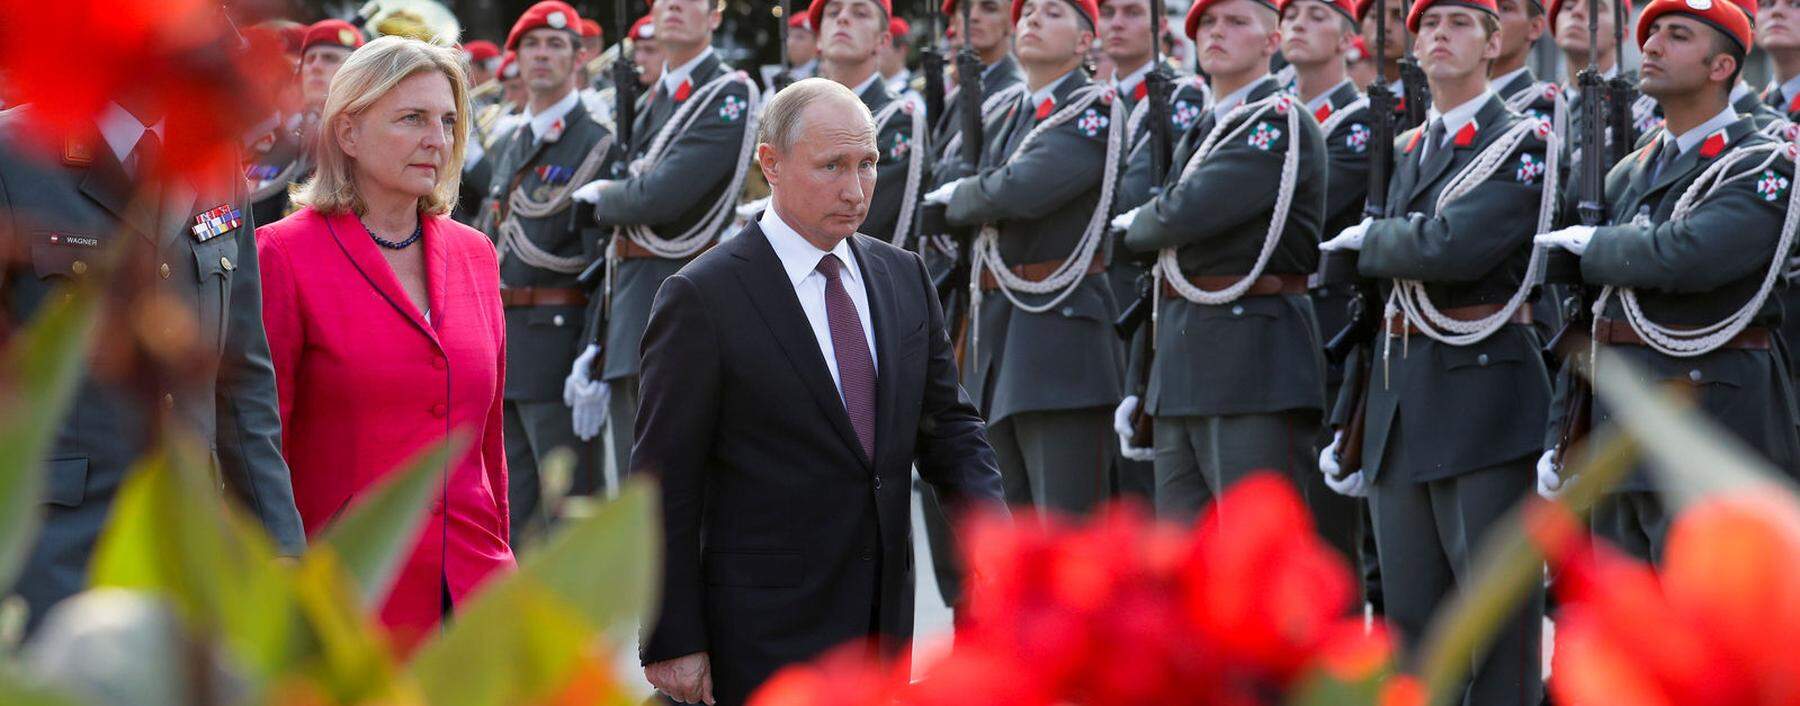 Russia's President Vladimir Putin visits Austria